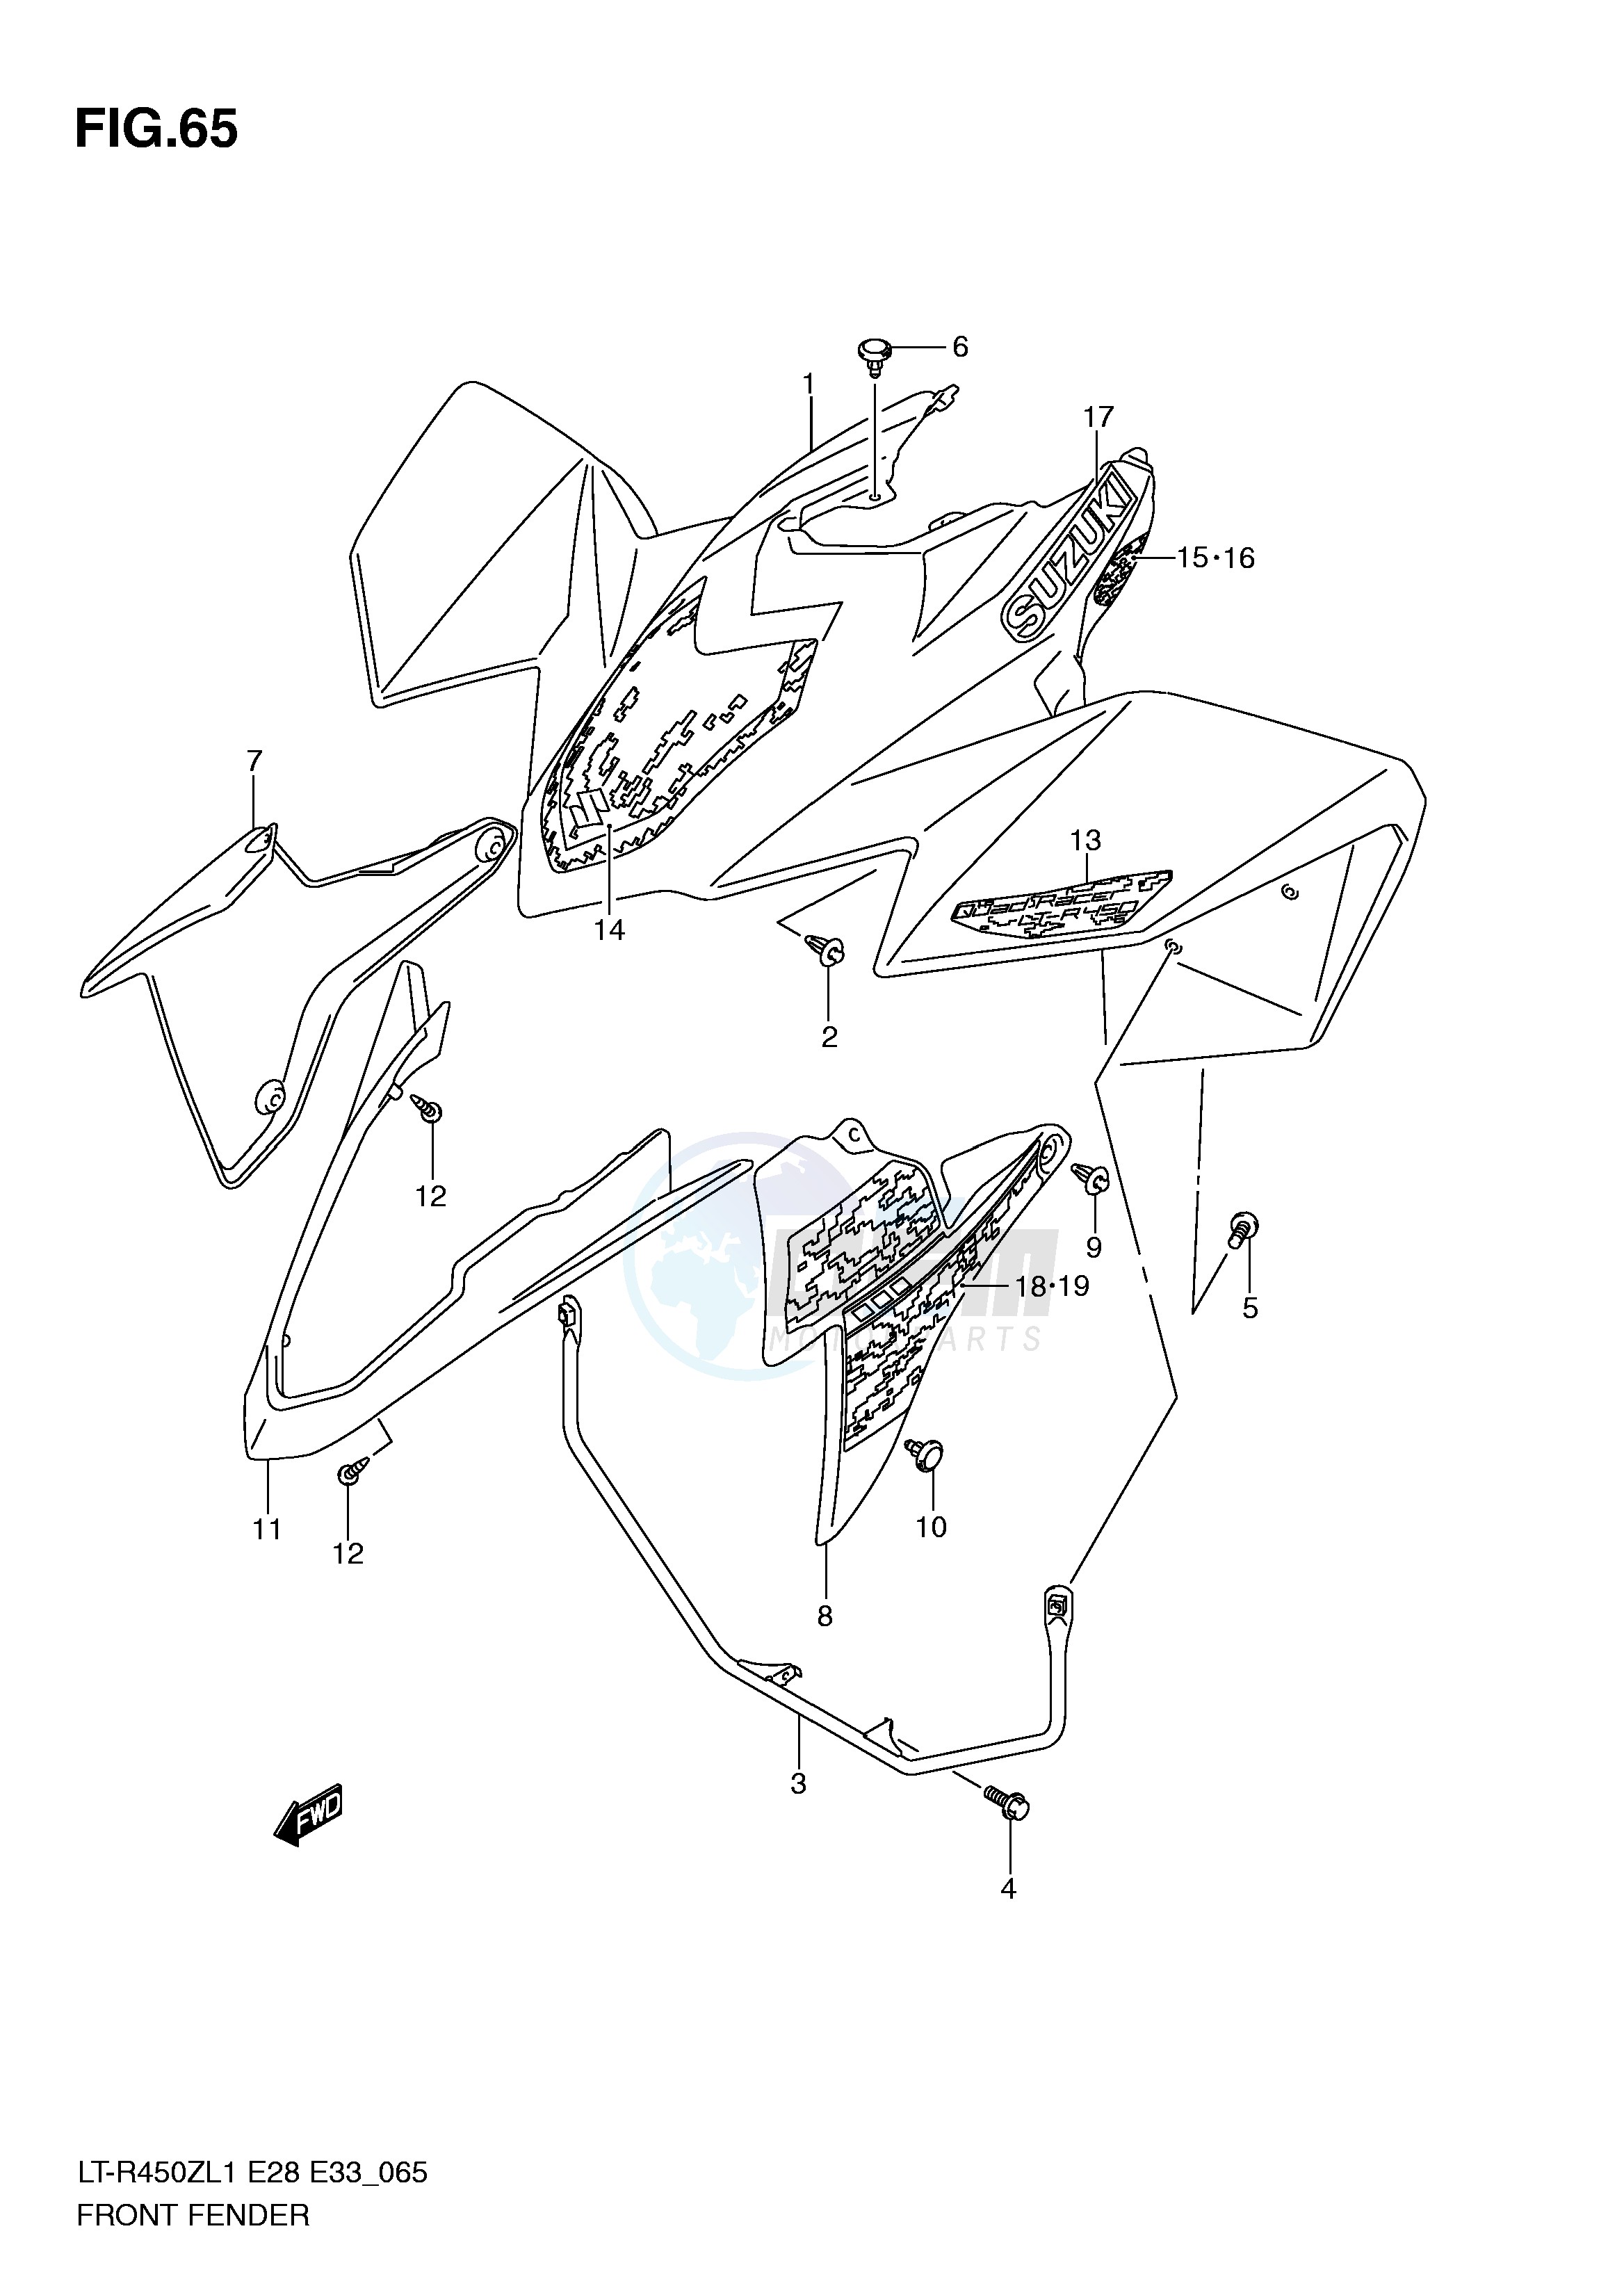 FRONT FENDER (LT-R450ZL1 E28) blueprint